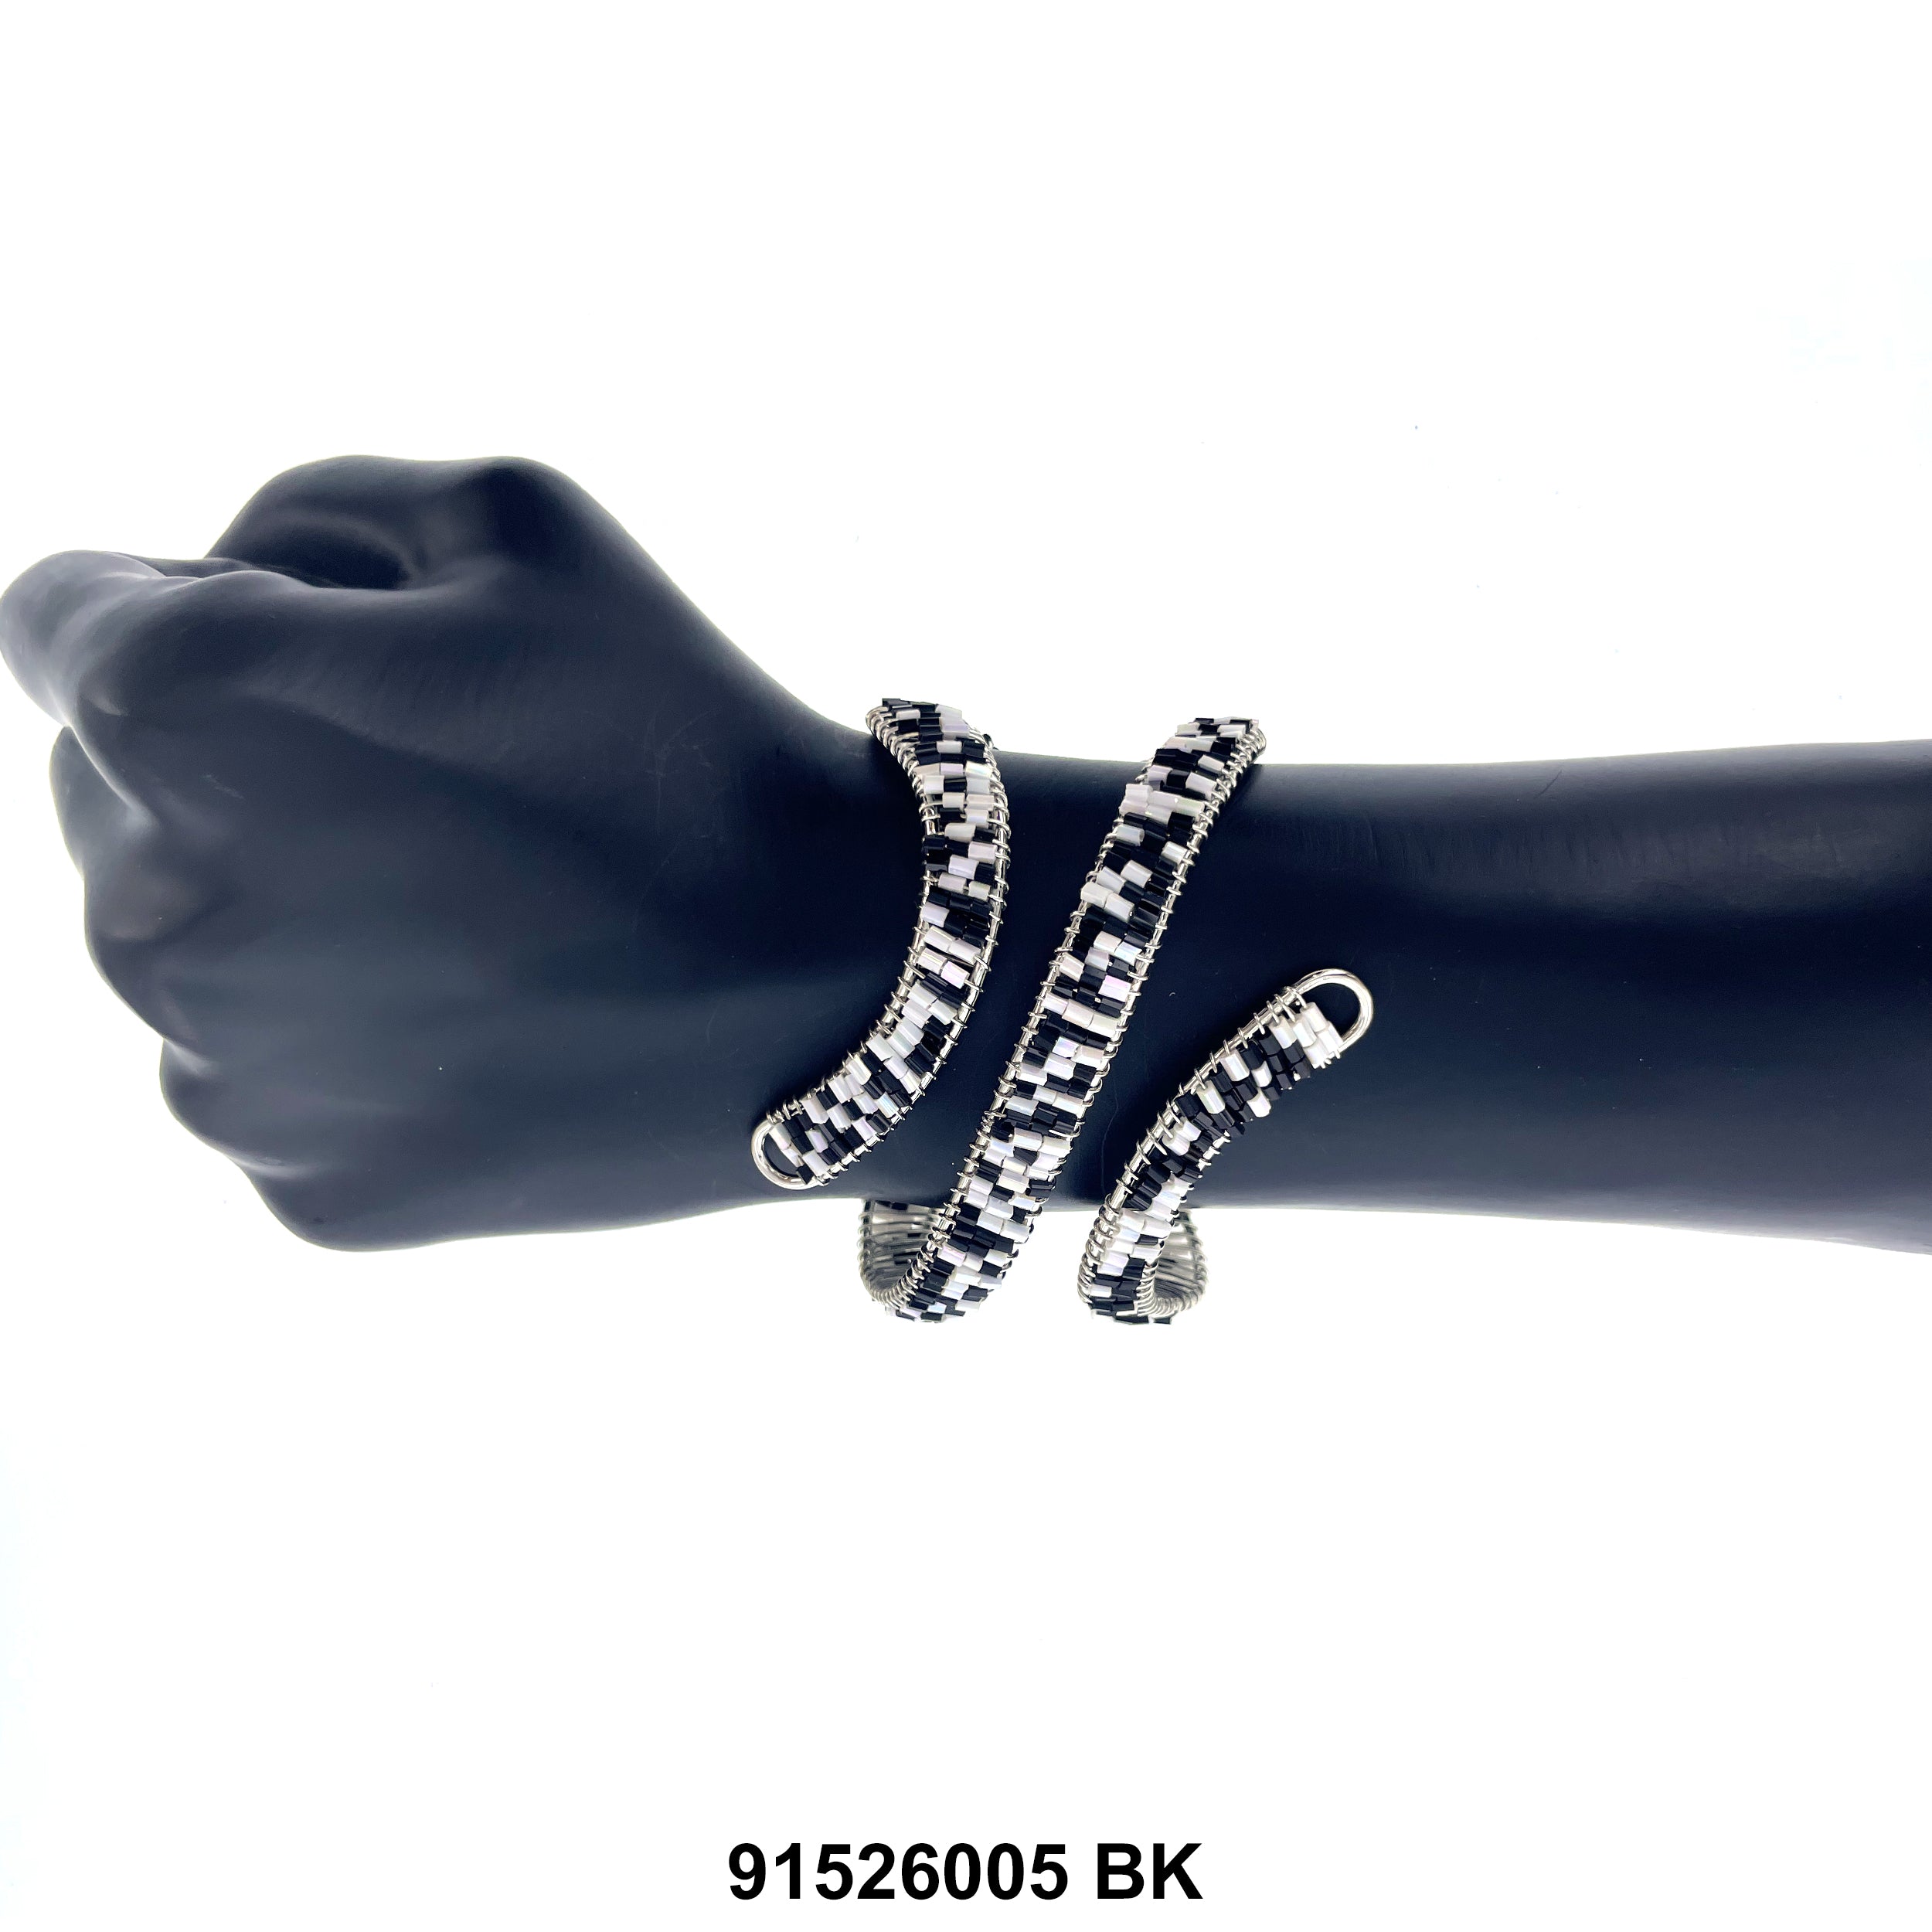 Cuff Bangle Bracelet 91526005 BK